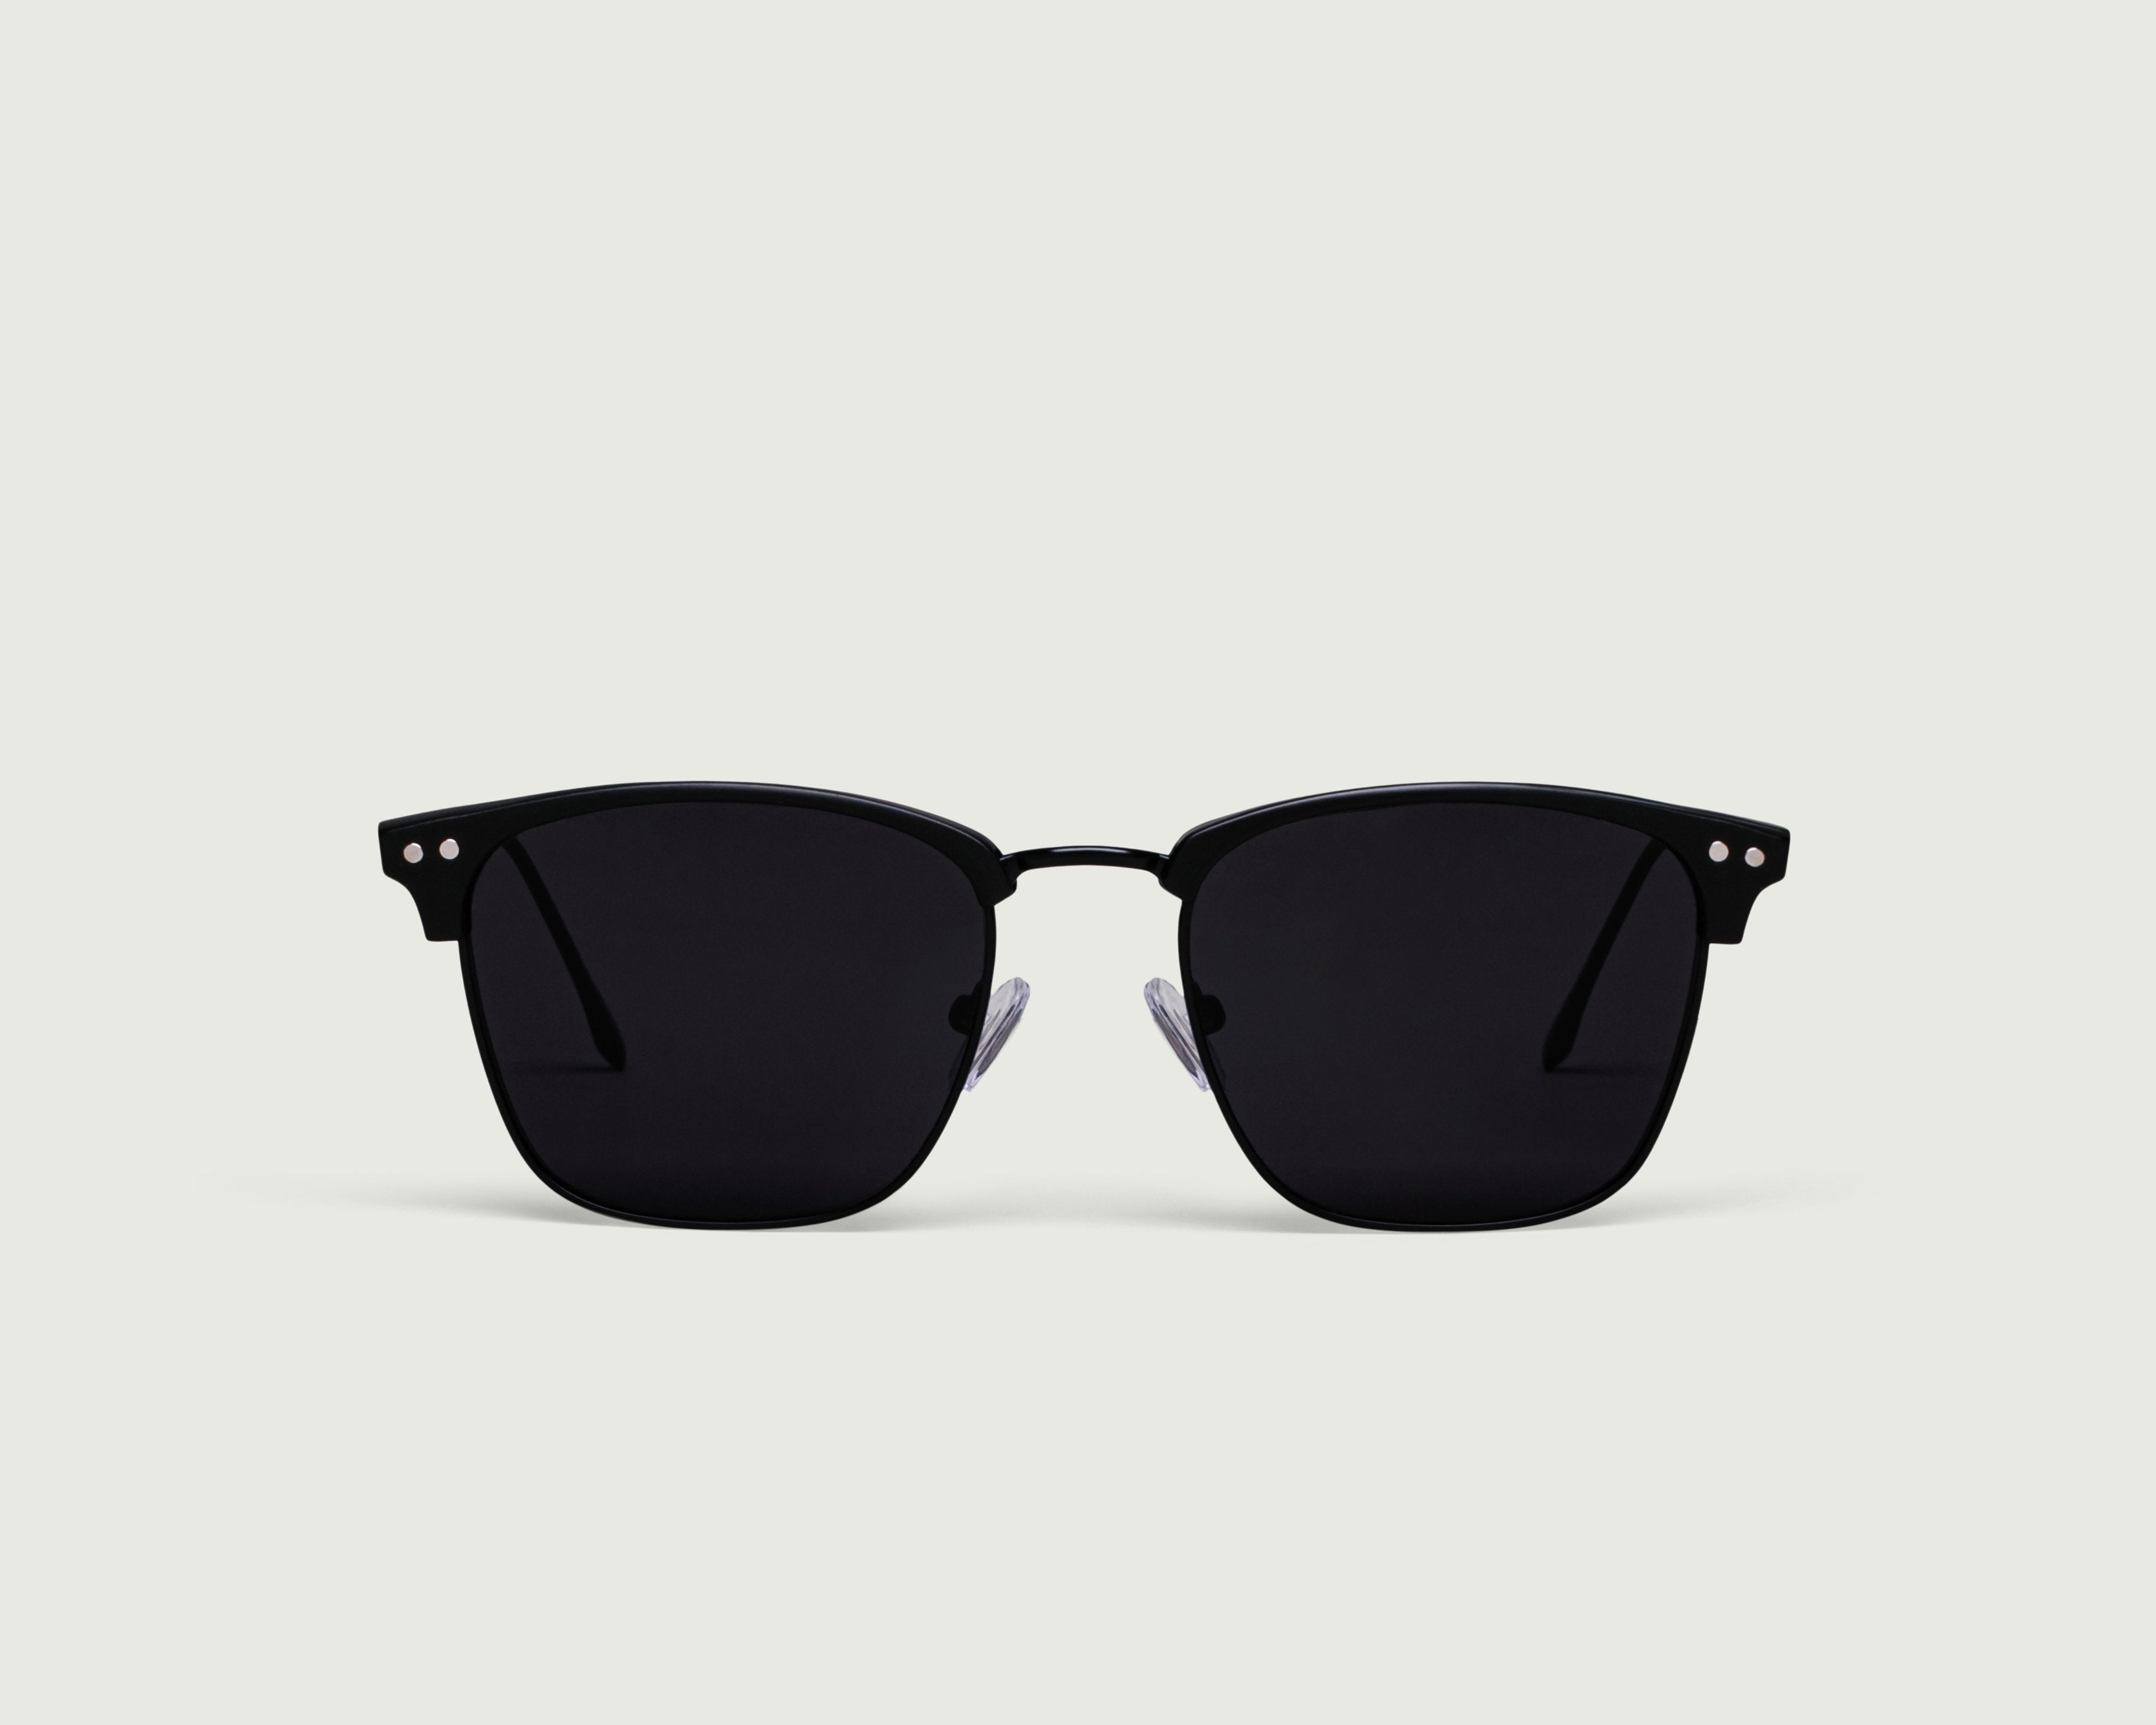 Charcoal::Bastian Sunglasses browline black metal plastic front